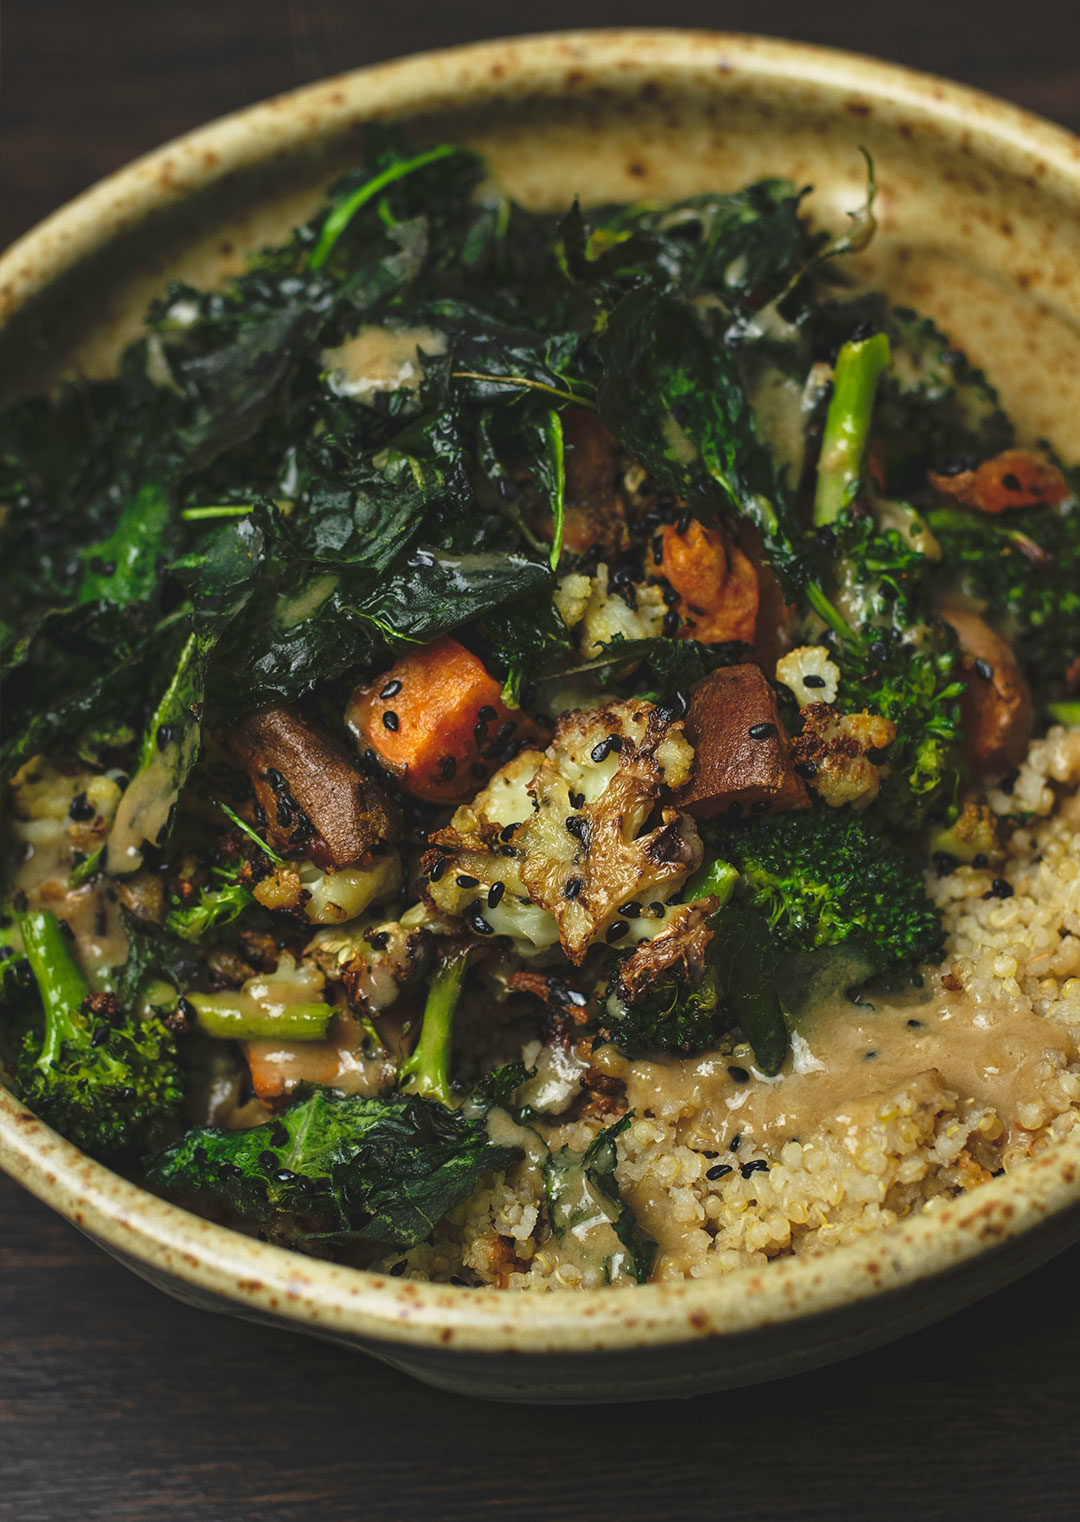 Healthy-Plant-based-vegan-recipes-so-yummy-says-me-bowl-zesty-life-squamish